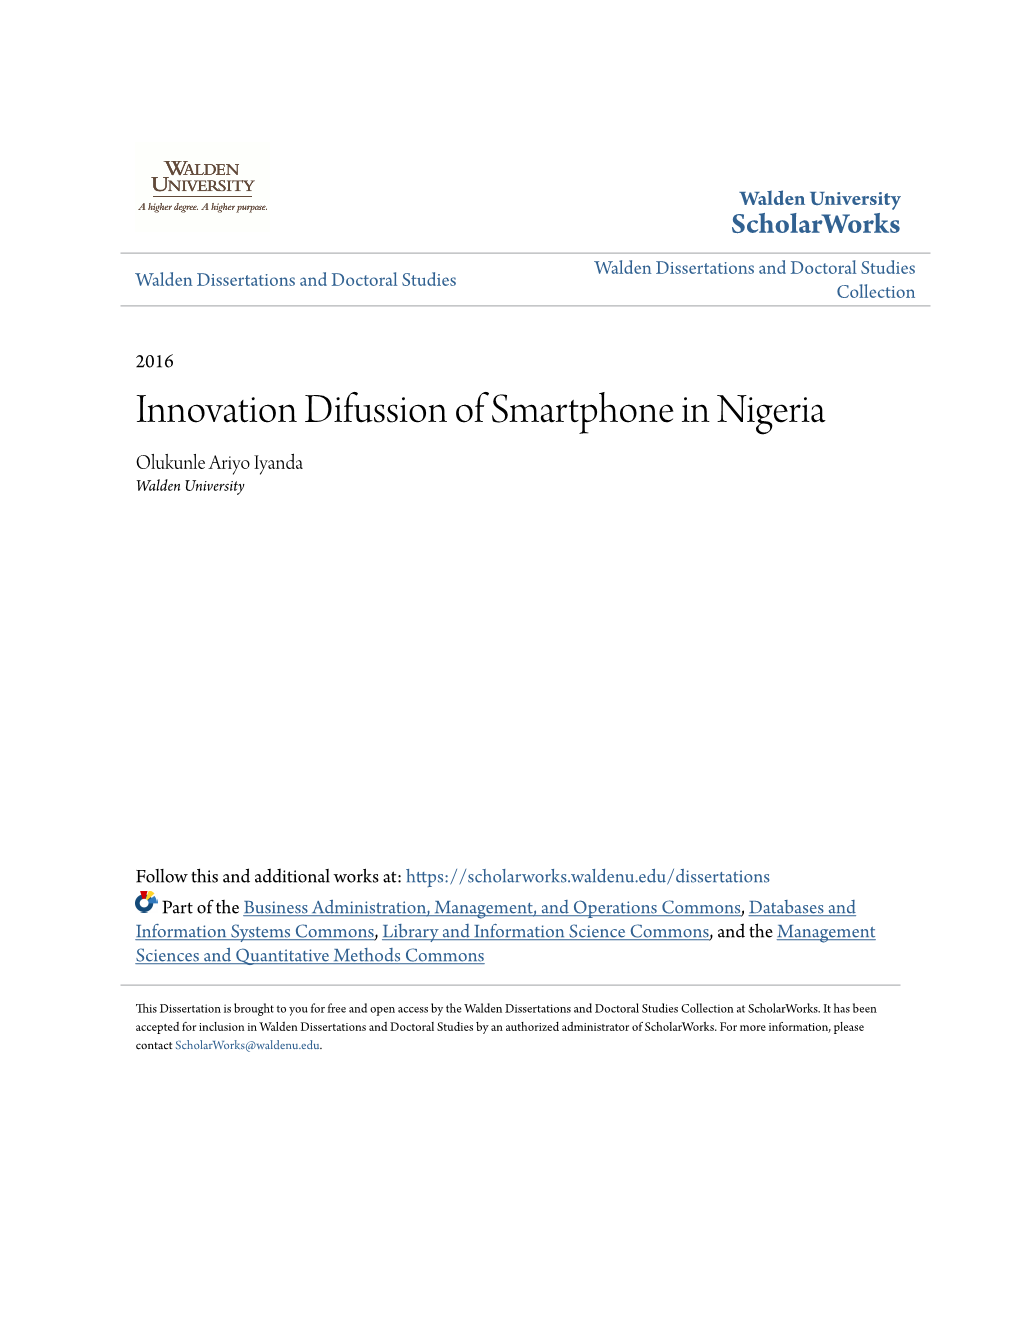 Innovation Difussion of Smartphone in Nigeria Olukunle Ariyo Iyanda Walden University